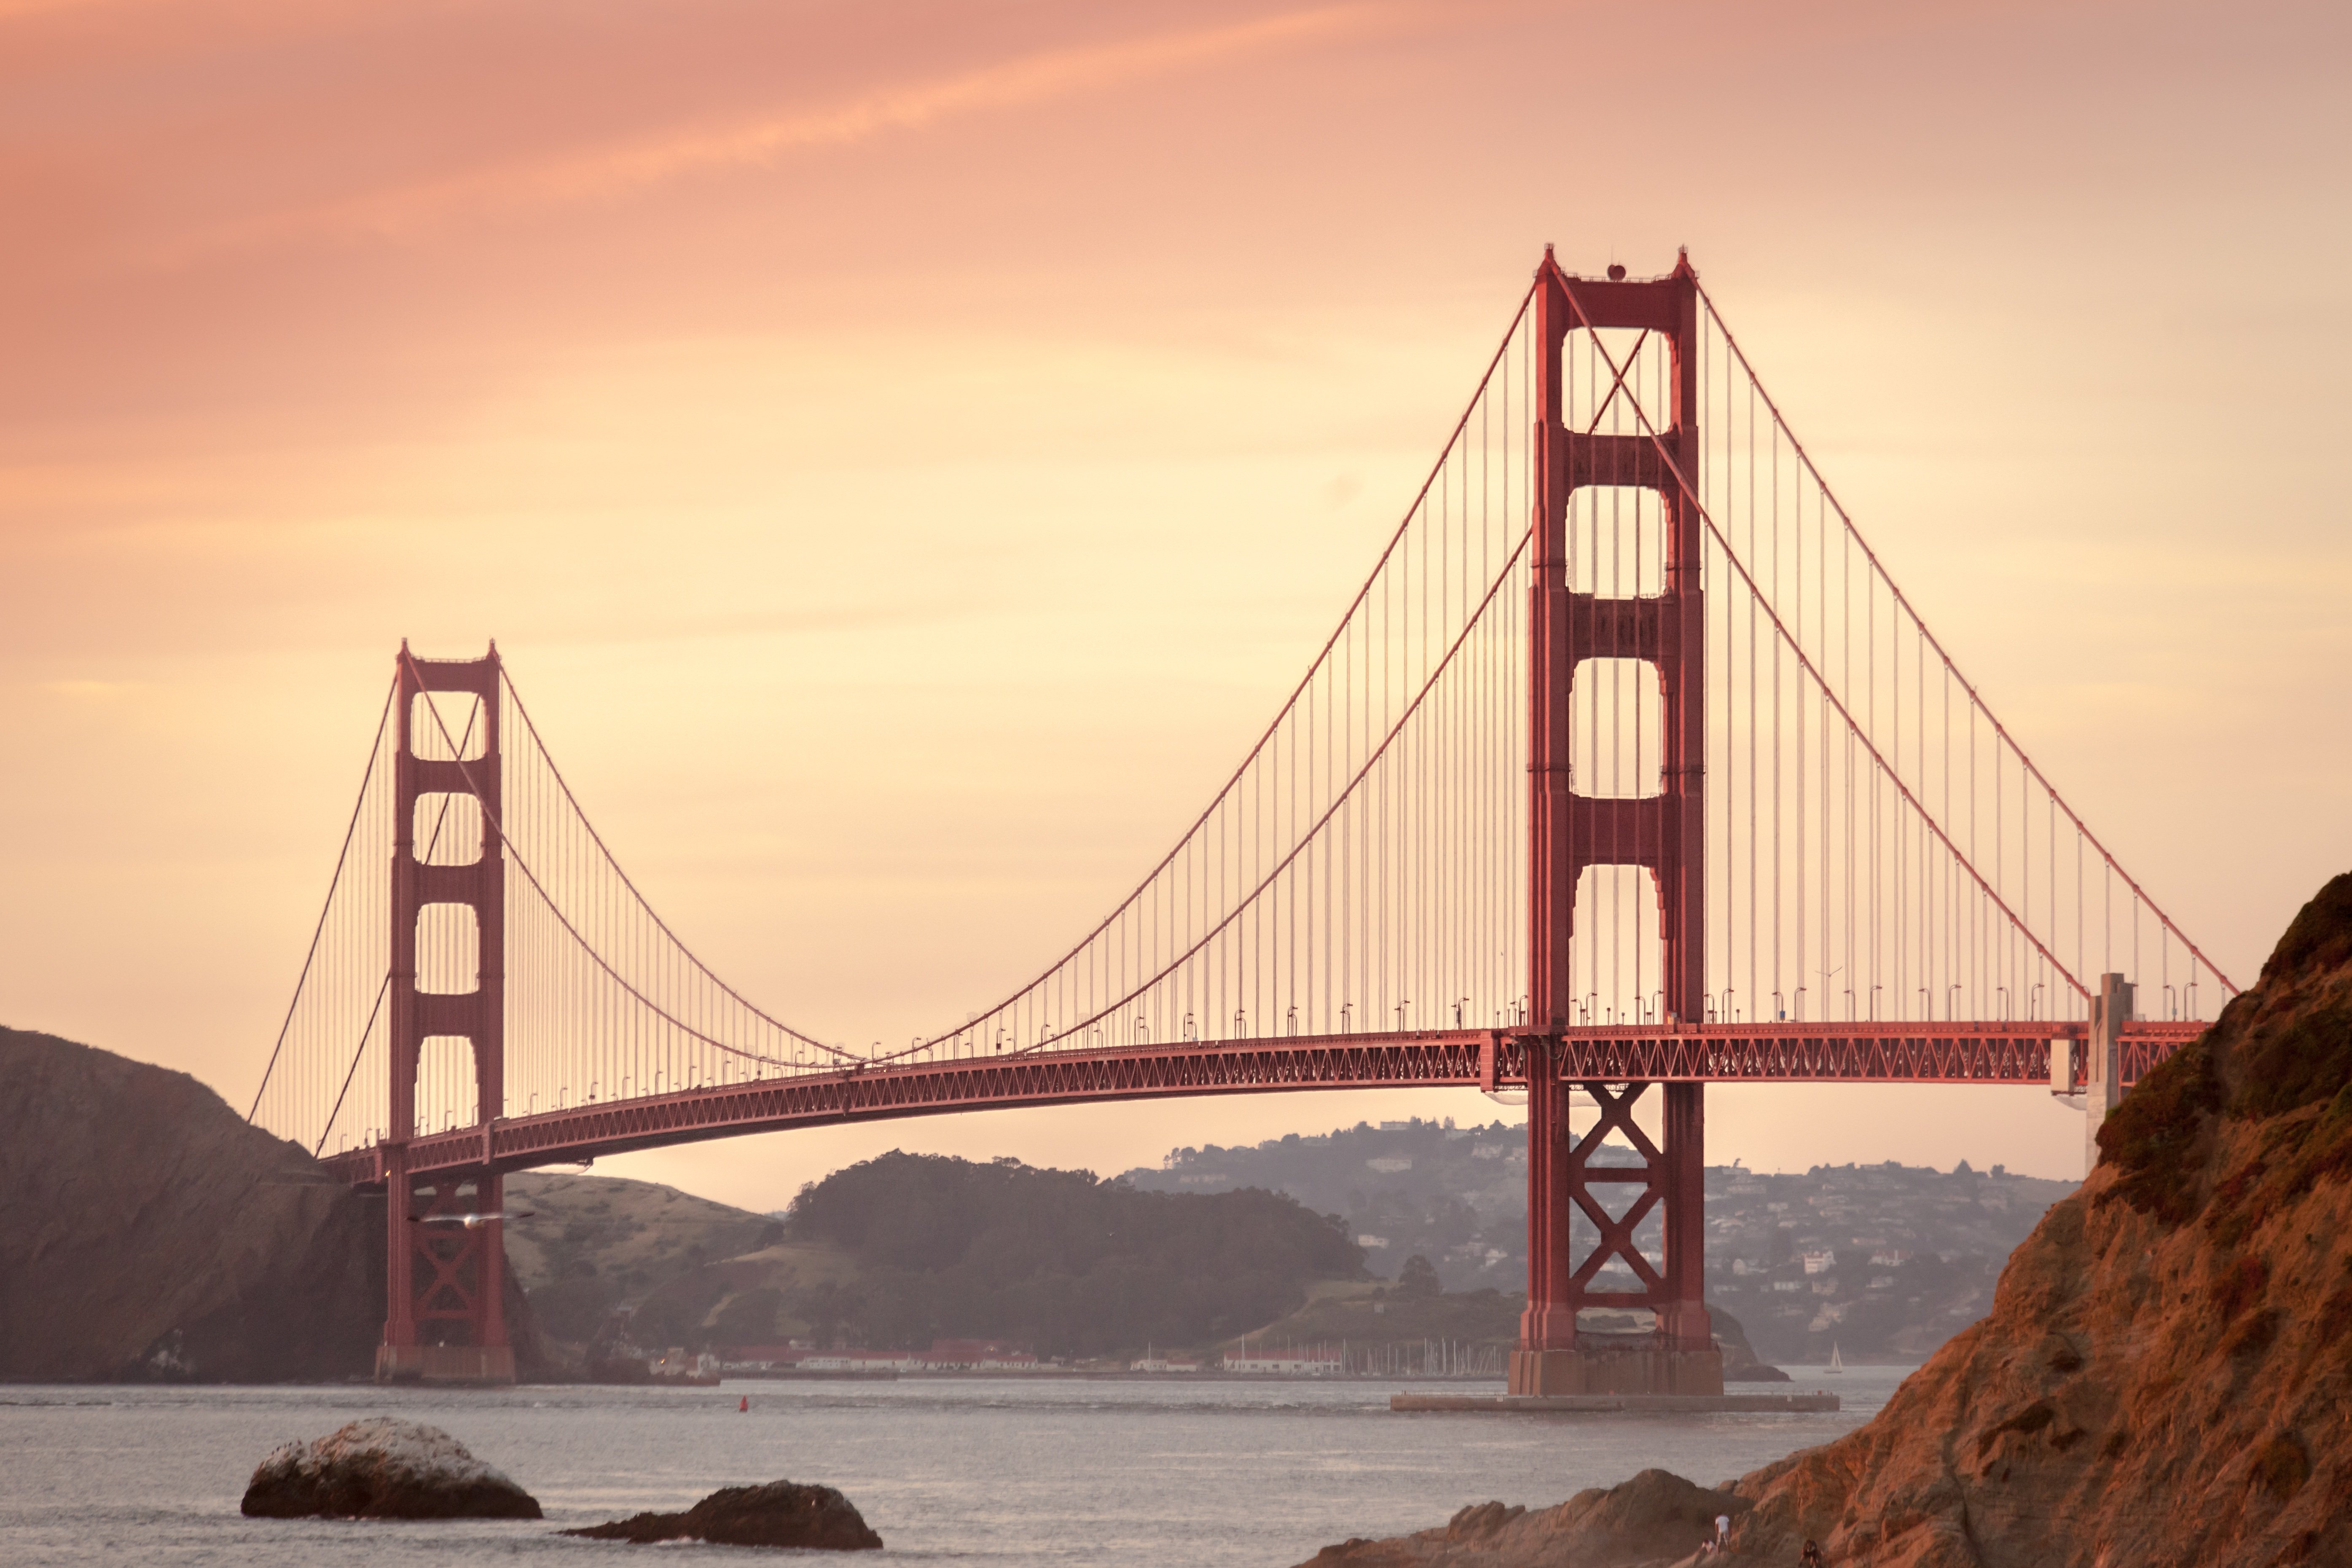 Photograph of the Golden Gate Bridge.